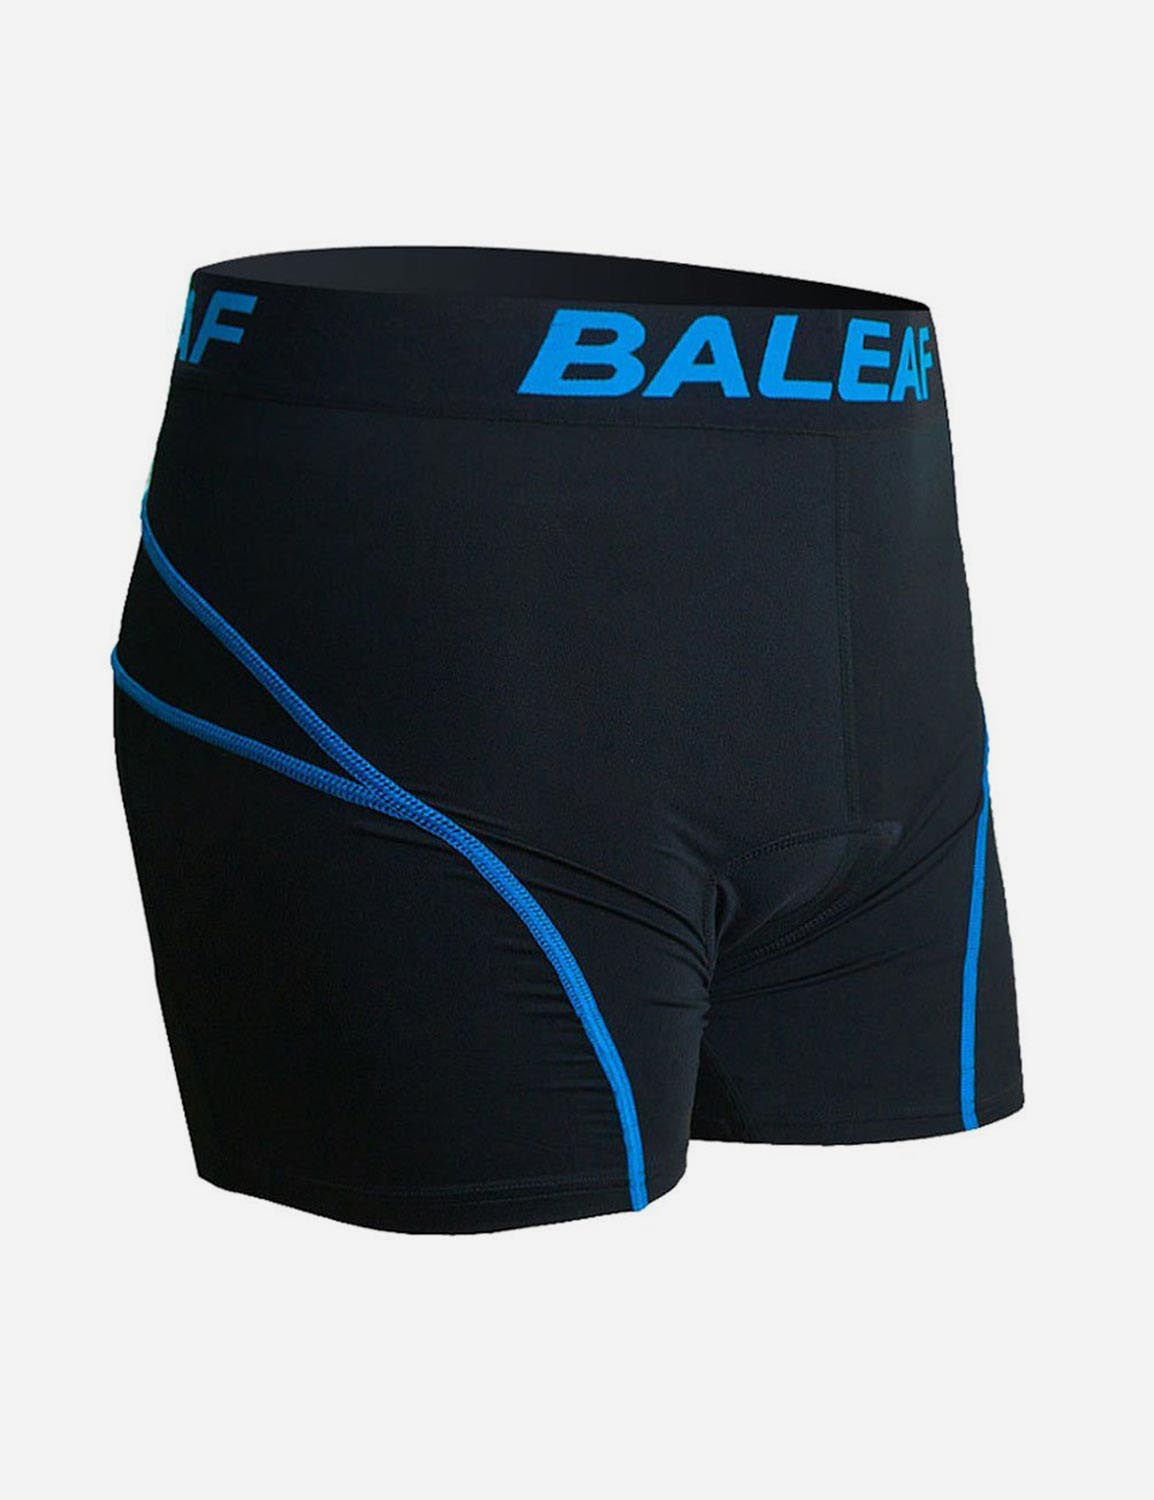 Baleaf Men's Compression Chamois Padded Cycling Shorts – Baleaf Sports